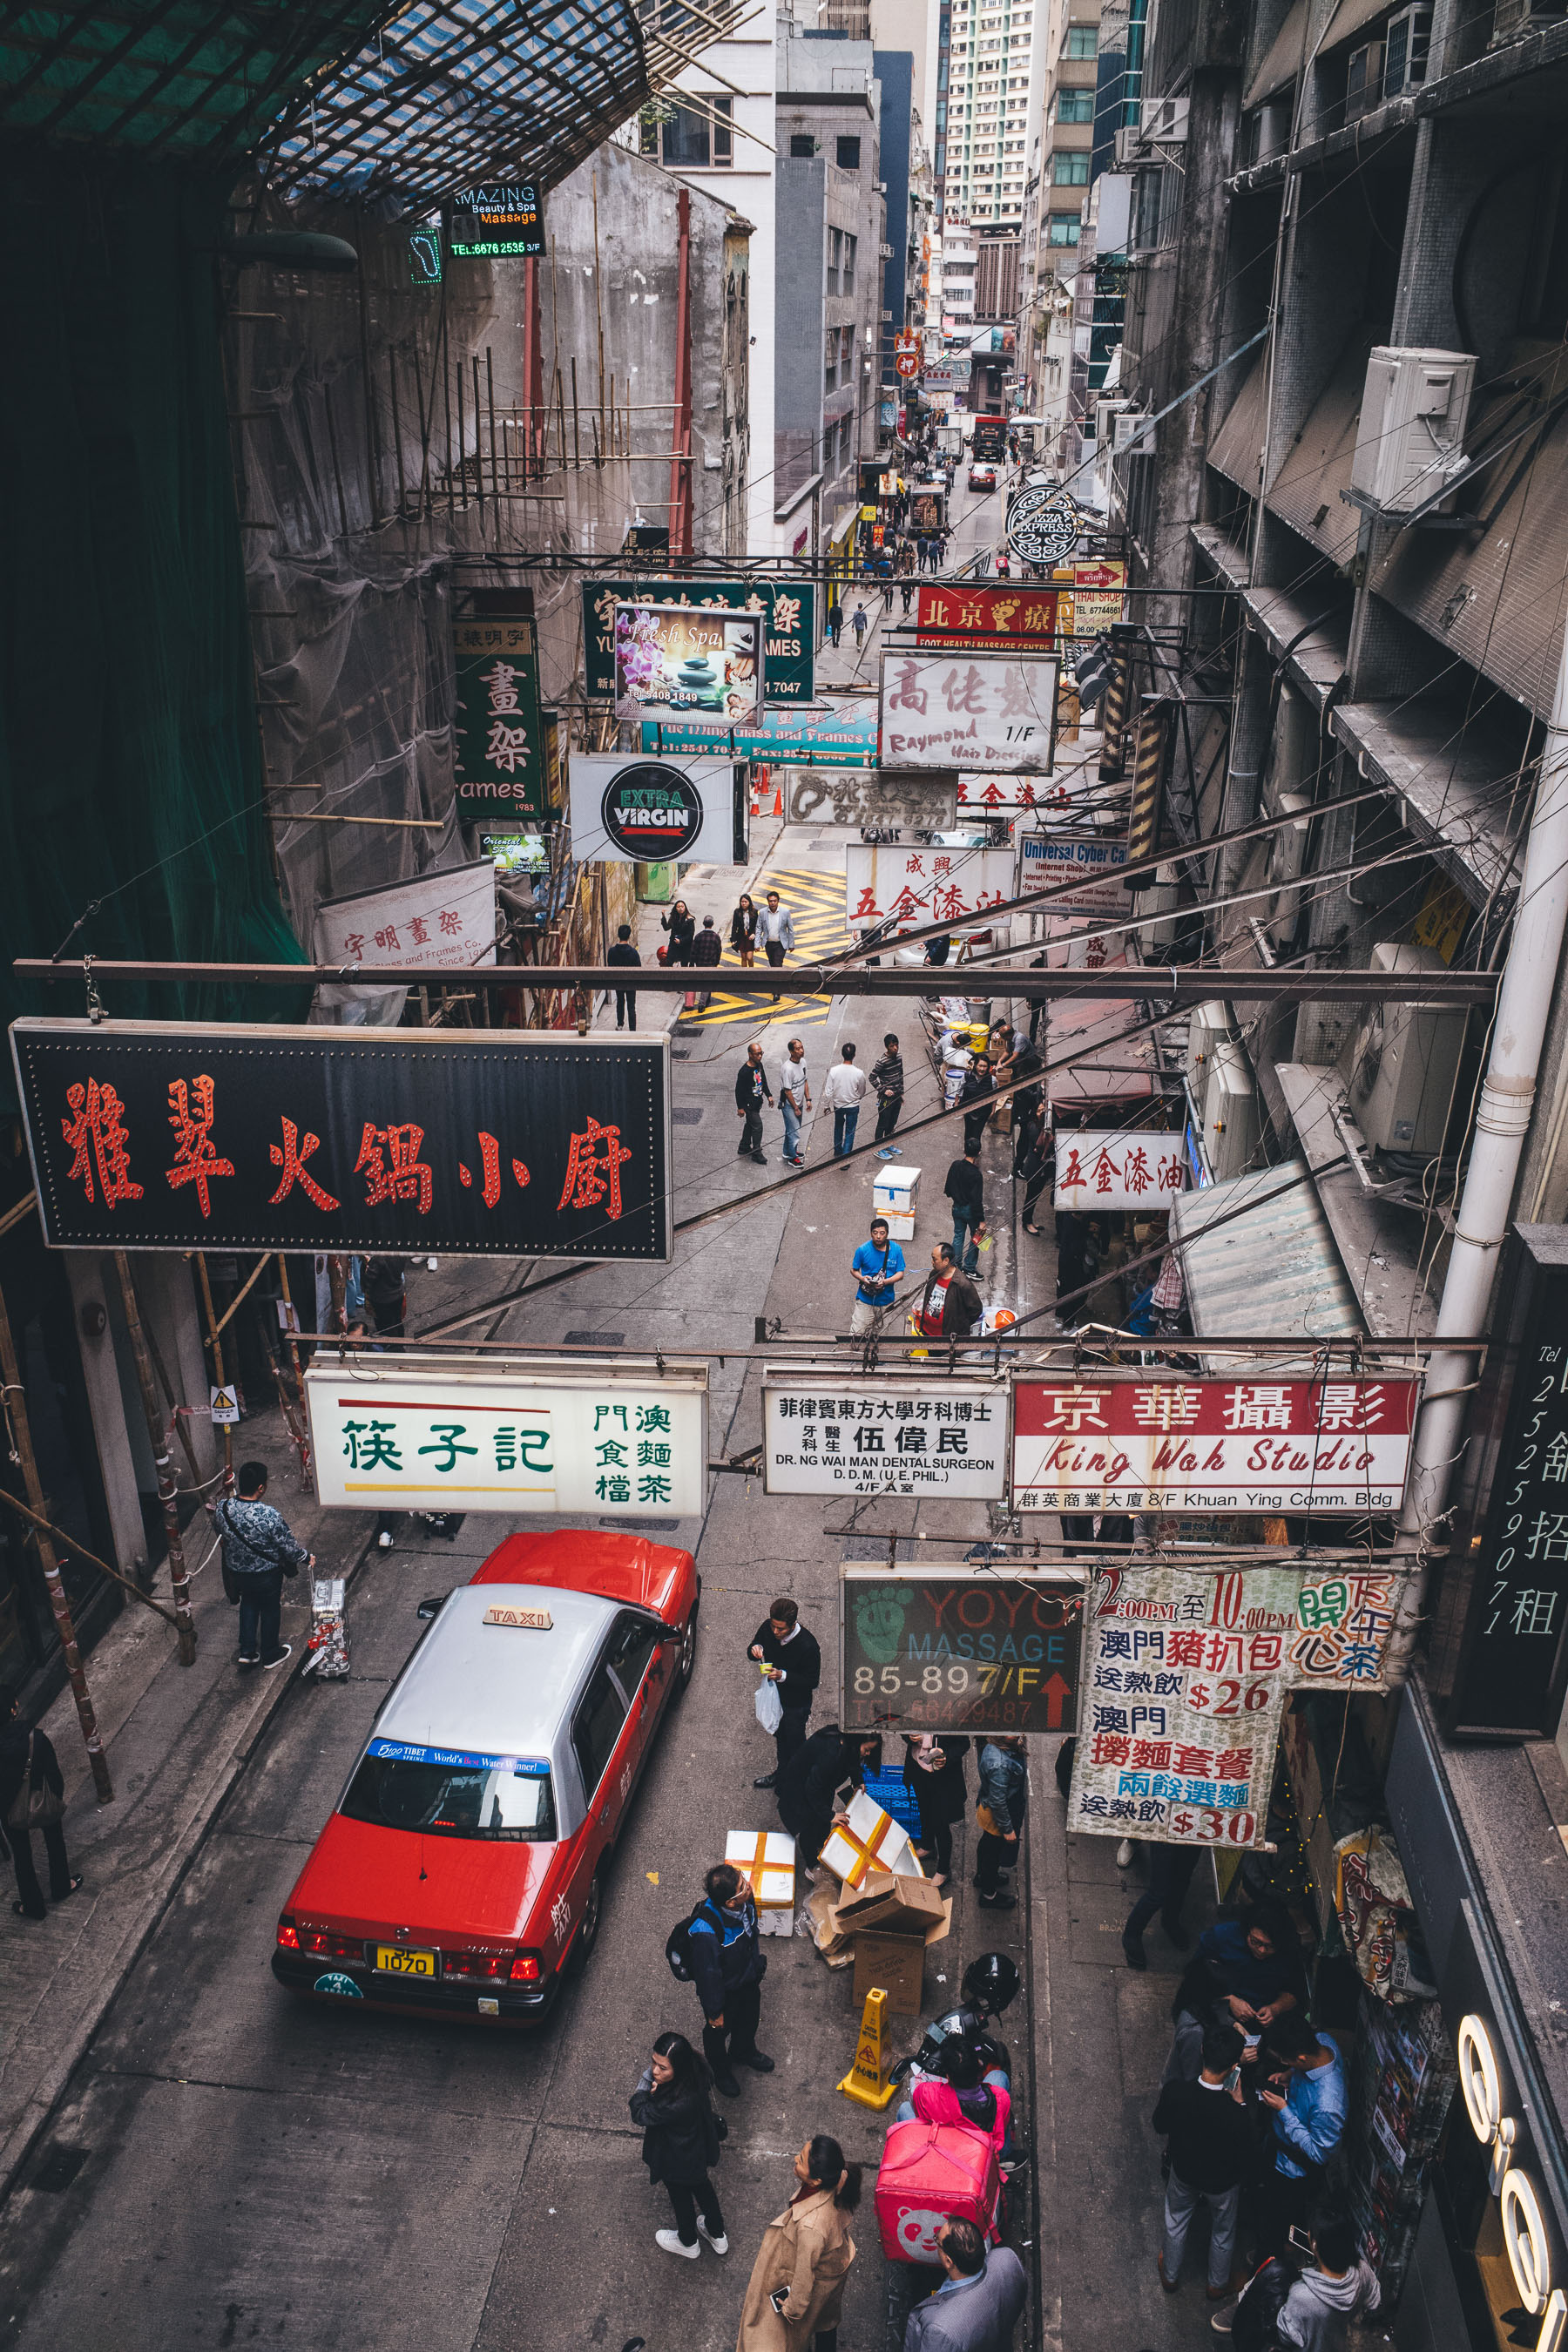 hong kong street scene from above